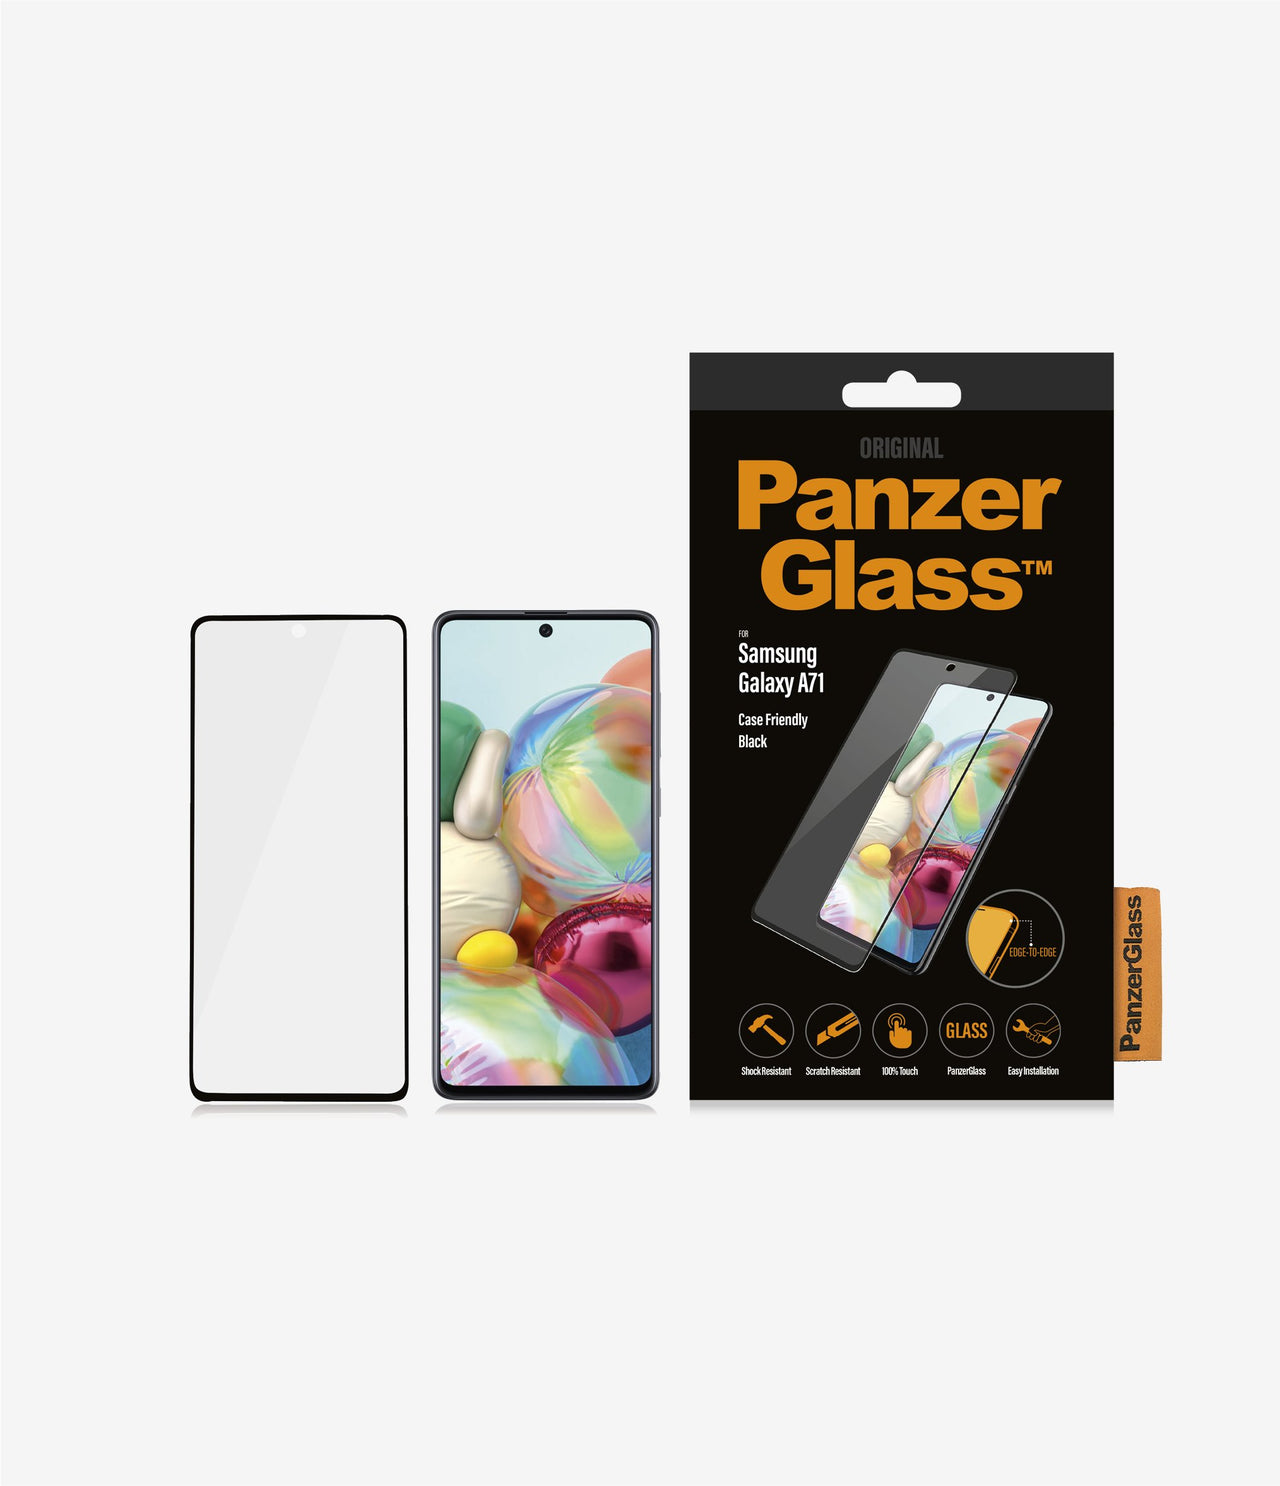 Panzer Glass Screen Protector for Samsung Galaxy A71 - Black